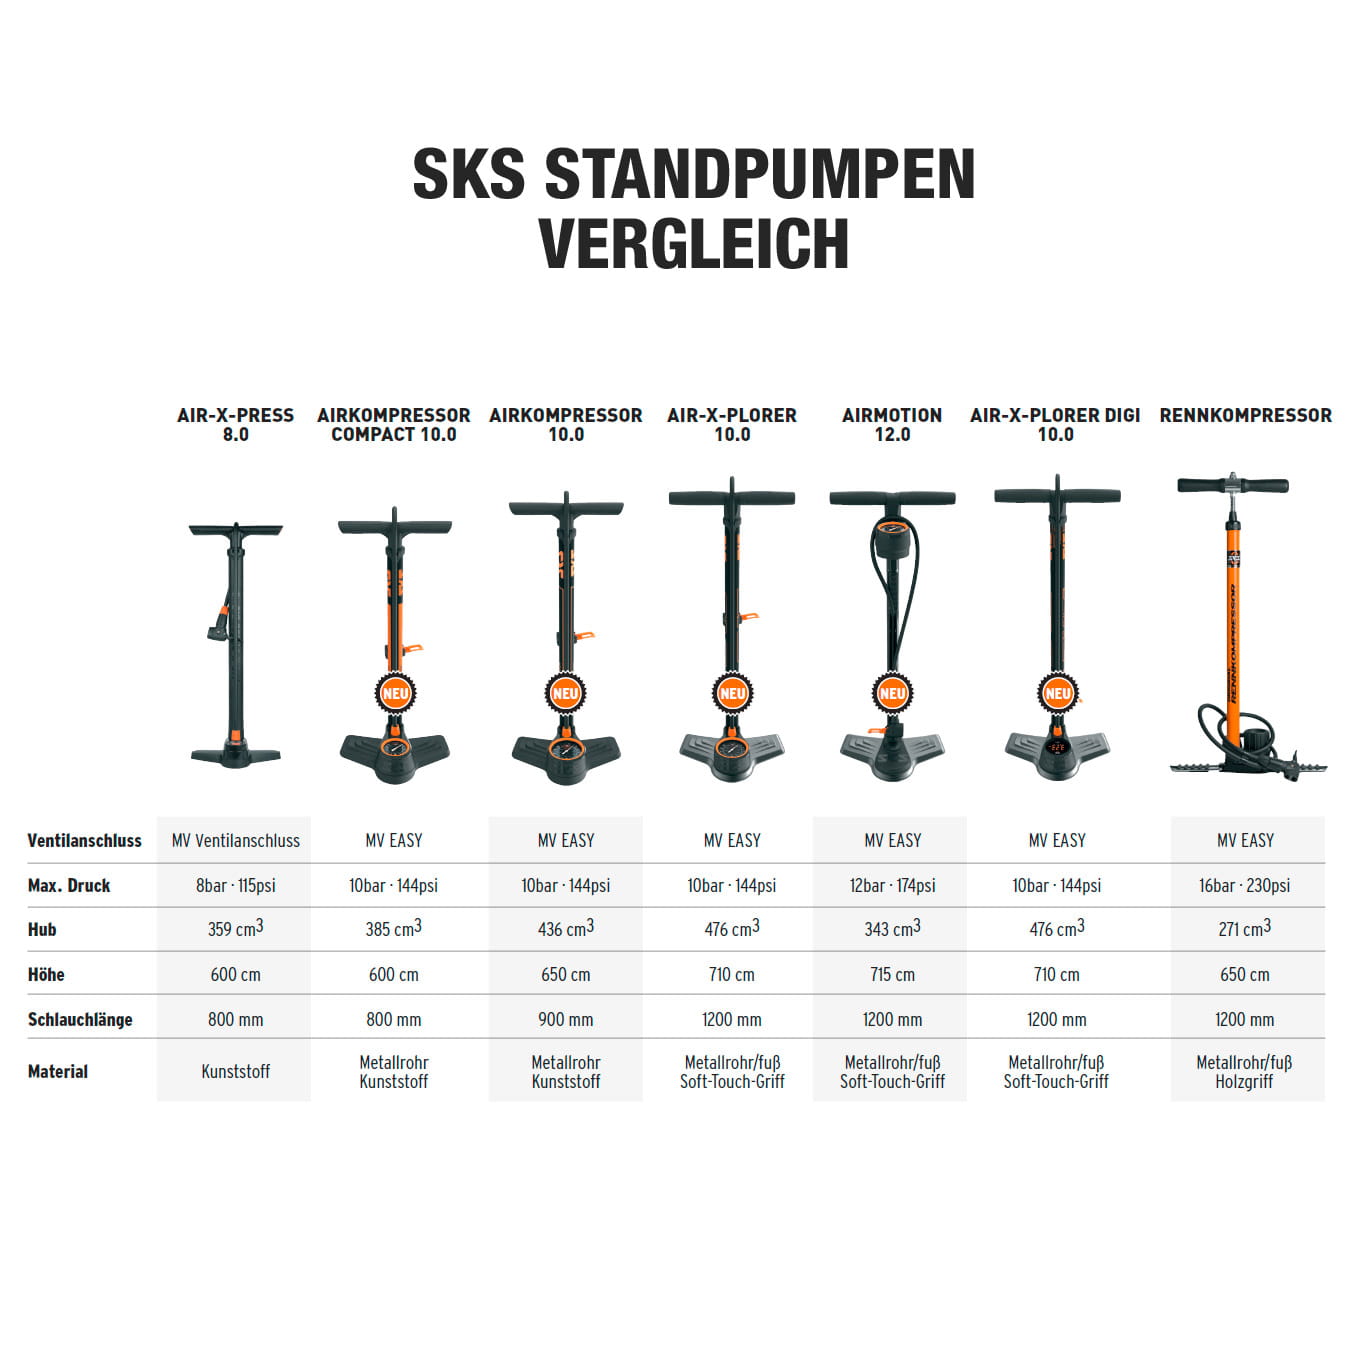 SKS Airkompressor 10.0 Standpumpe